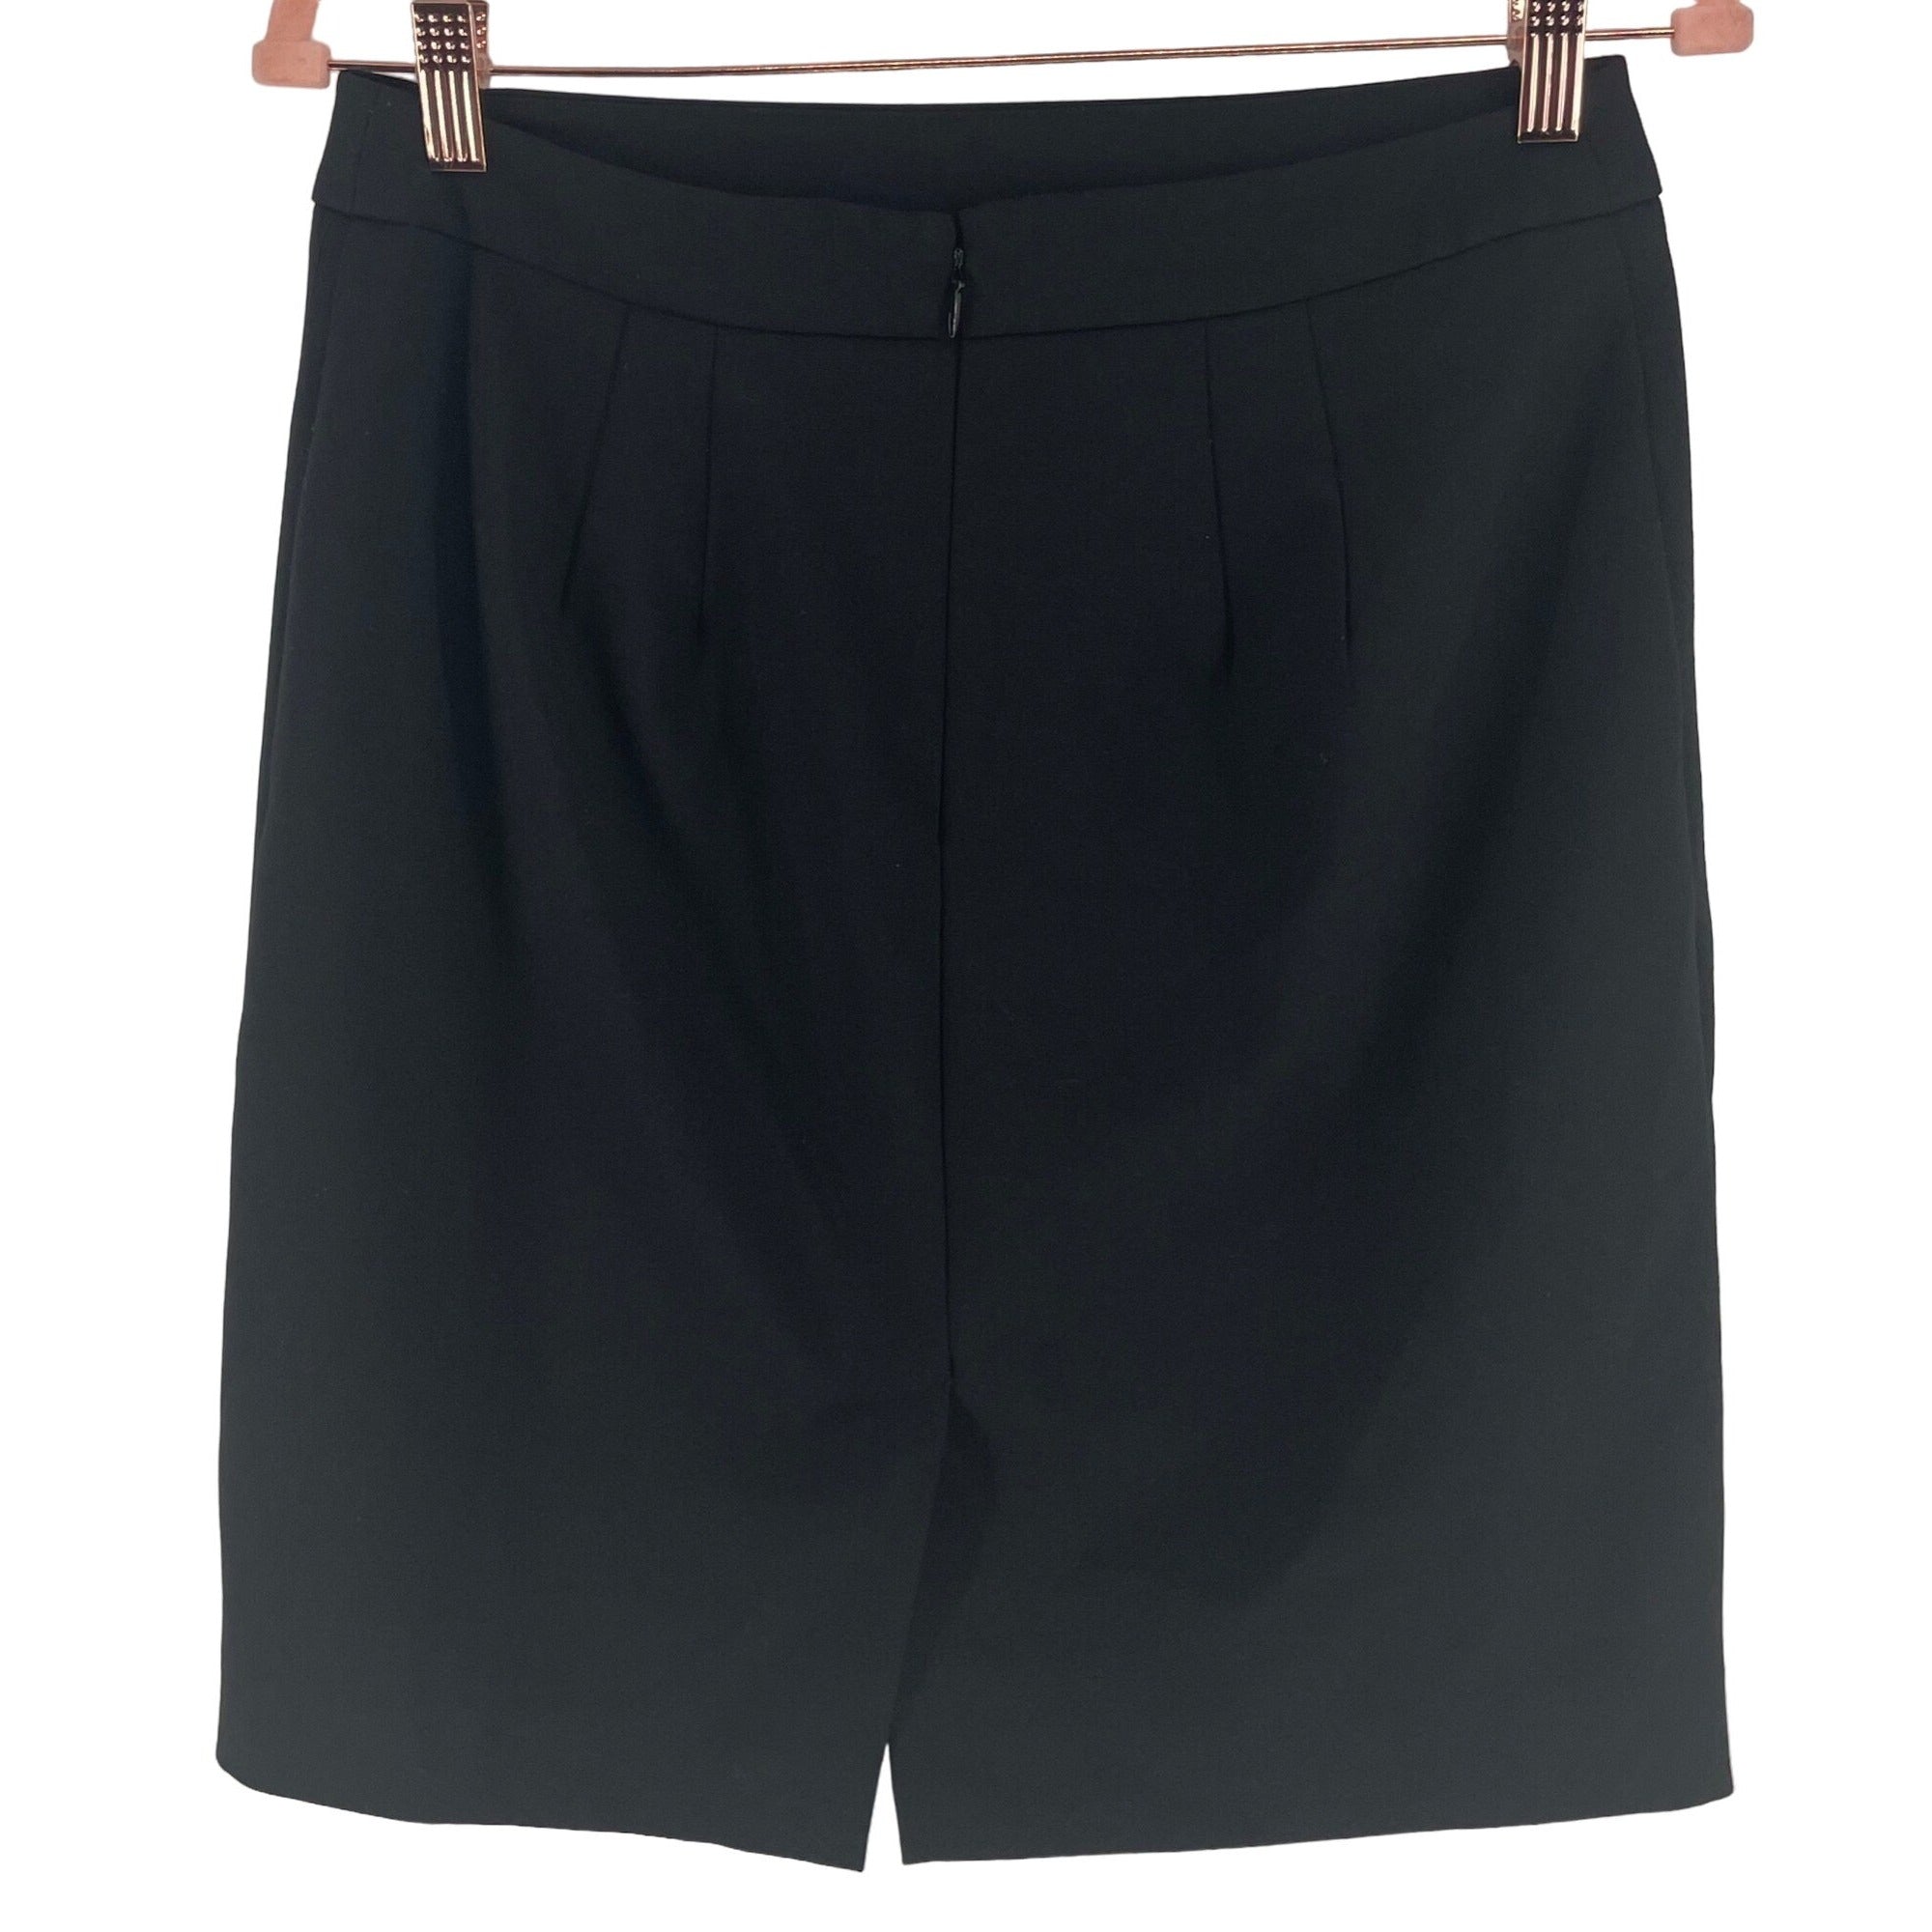 LOFT Petites Women's Size 6P Black Pencil Skirt